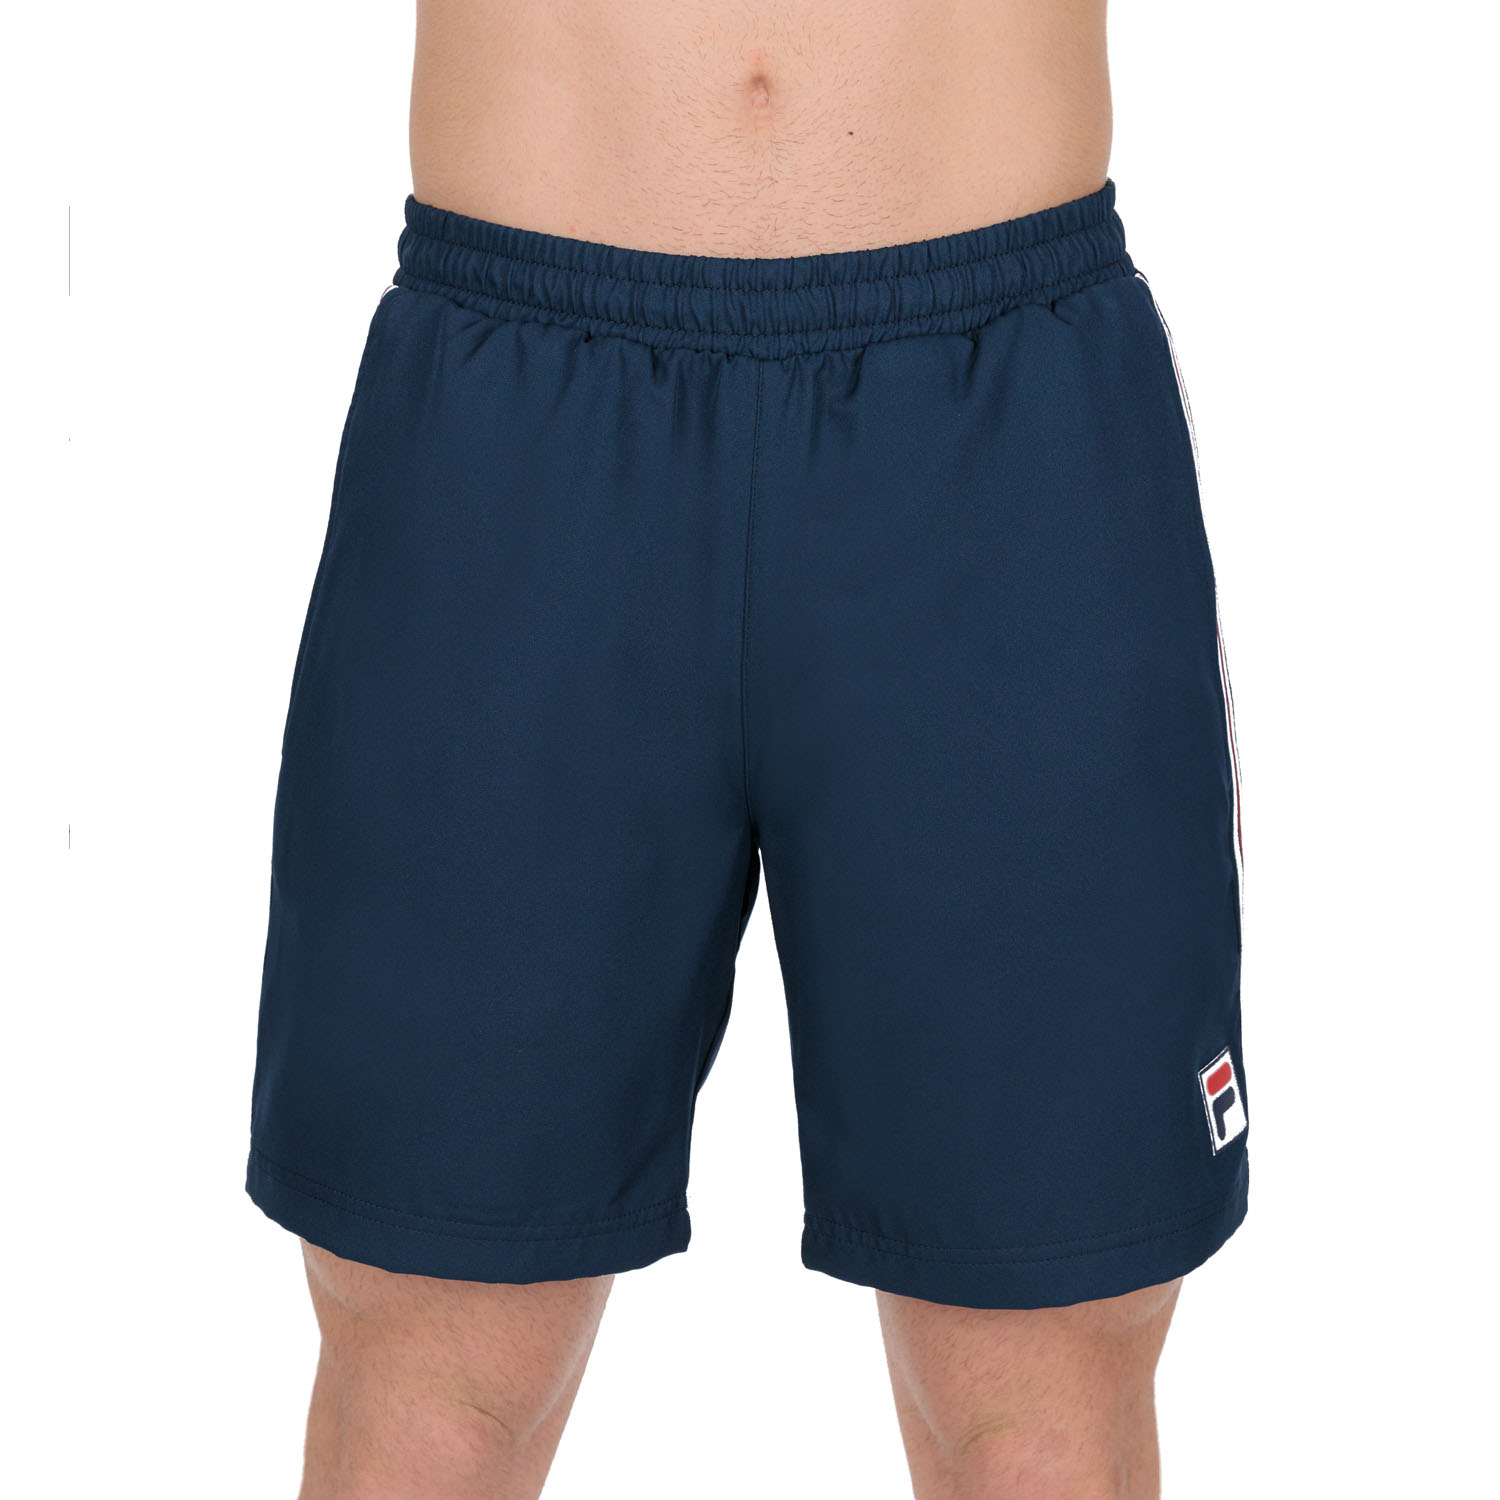 Fila Riley 7in Shorts - Peacoat Blue